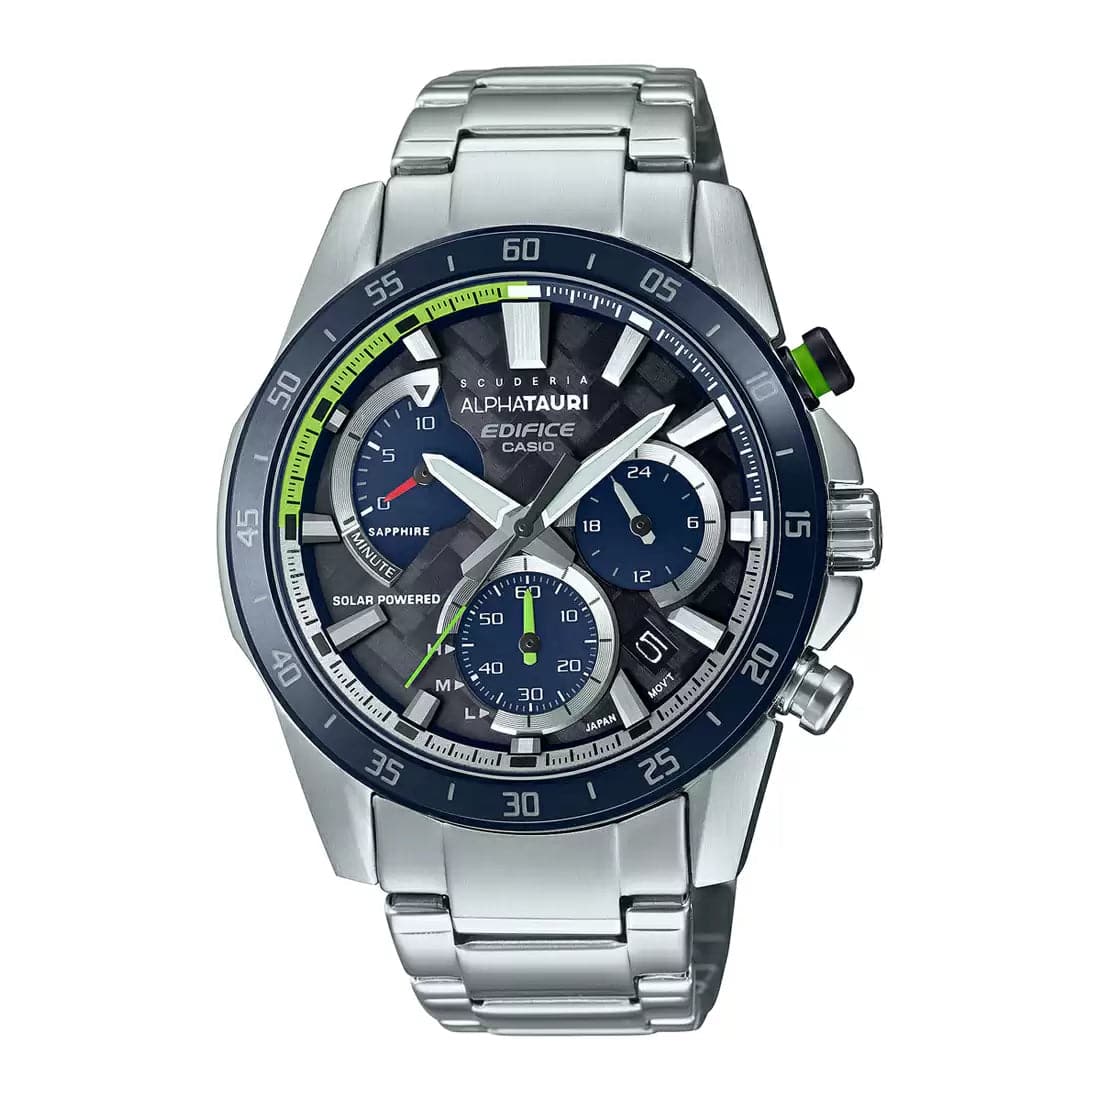 CASIO EDIFICE AlphaTauri Limited Edition - Men's Watch EX537 - Kamal Watch Company